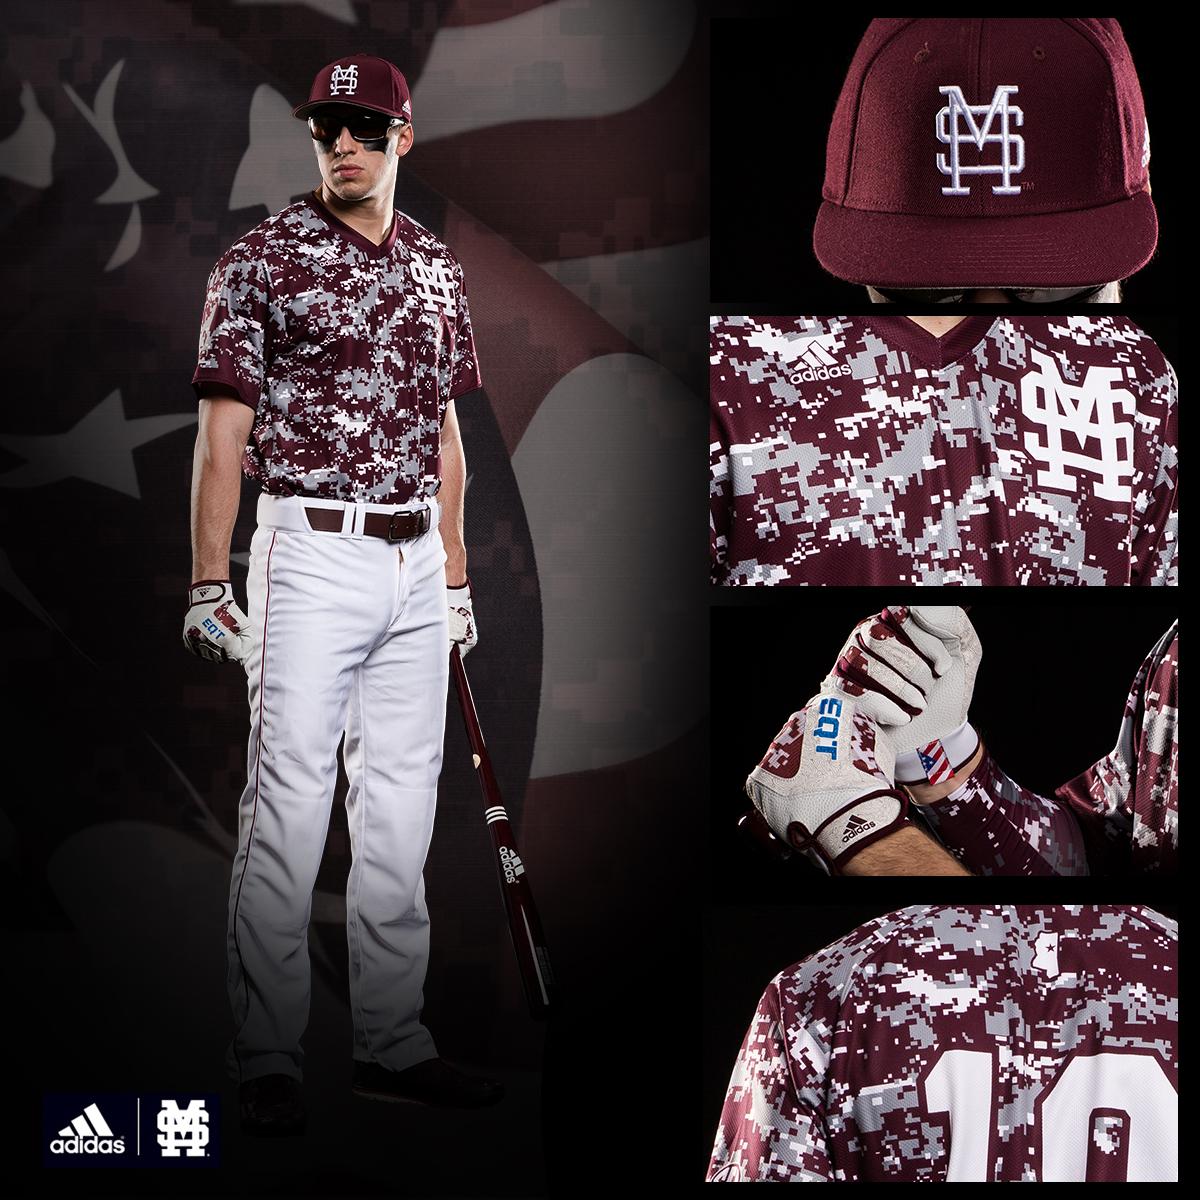 digital camo baseball uniforms